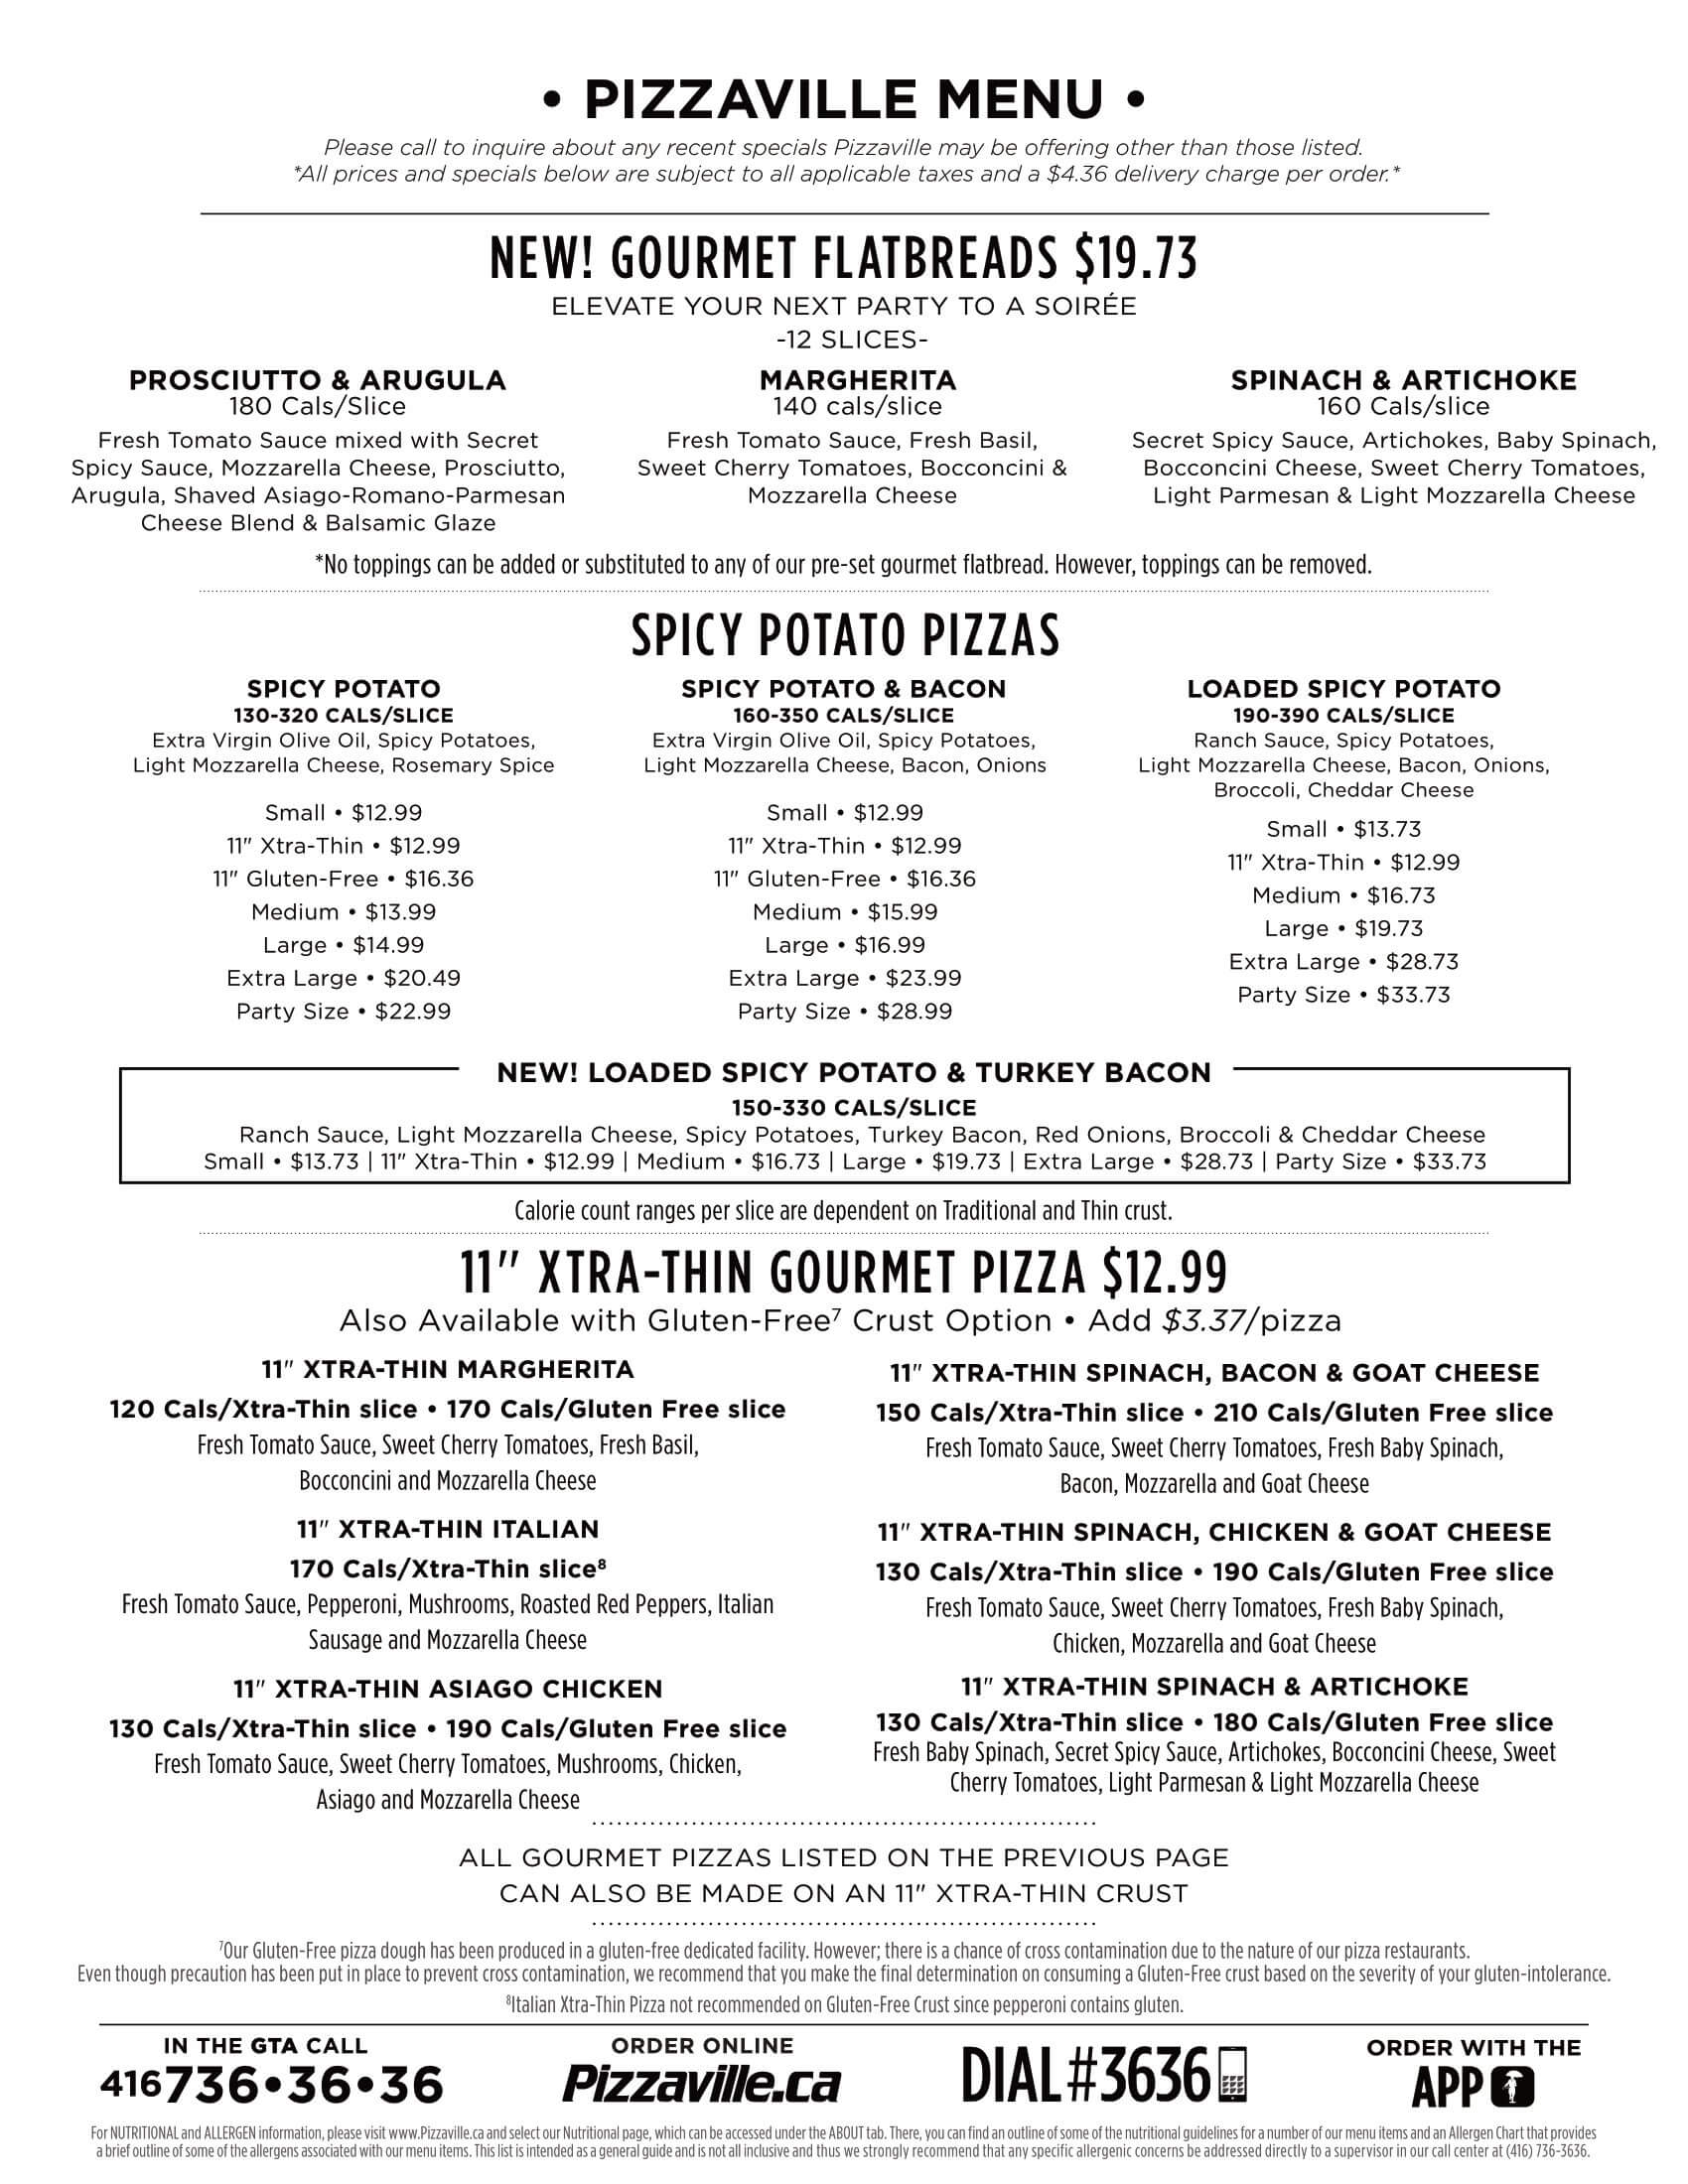 Pizzaville Menu Price List